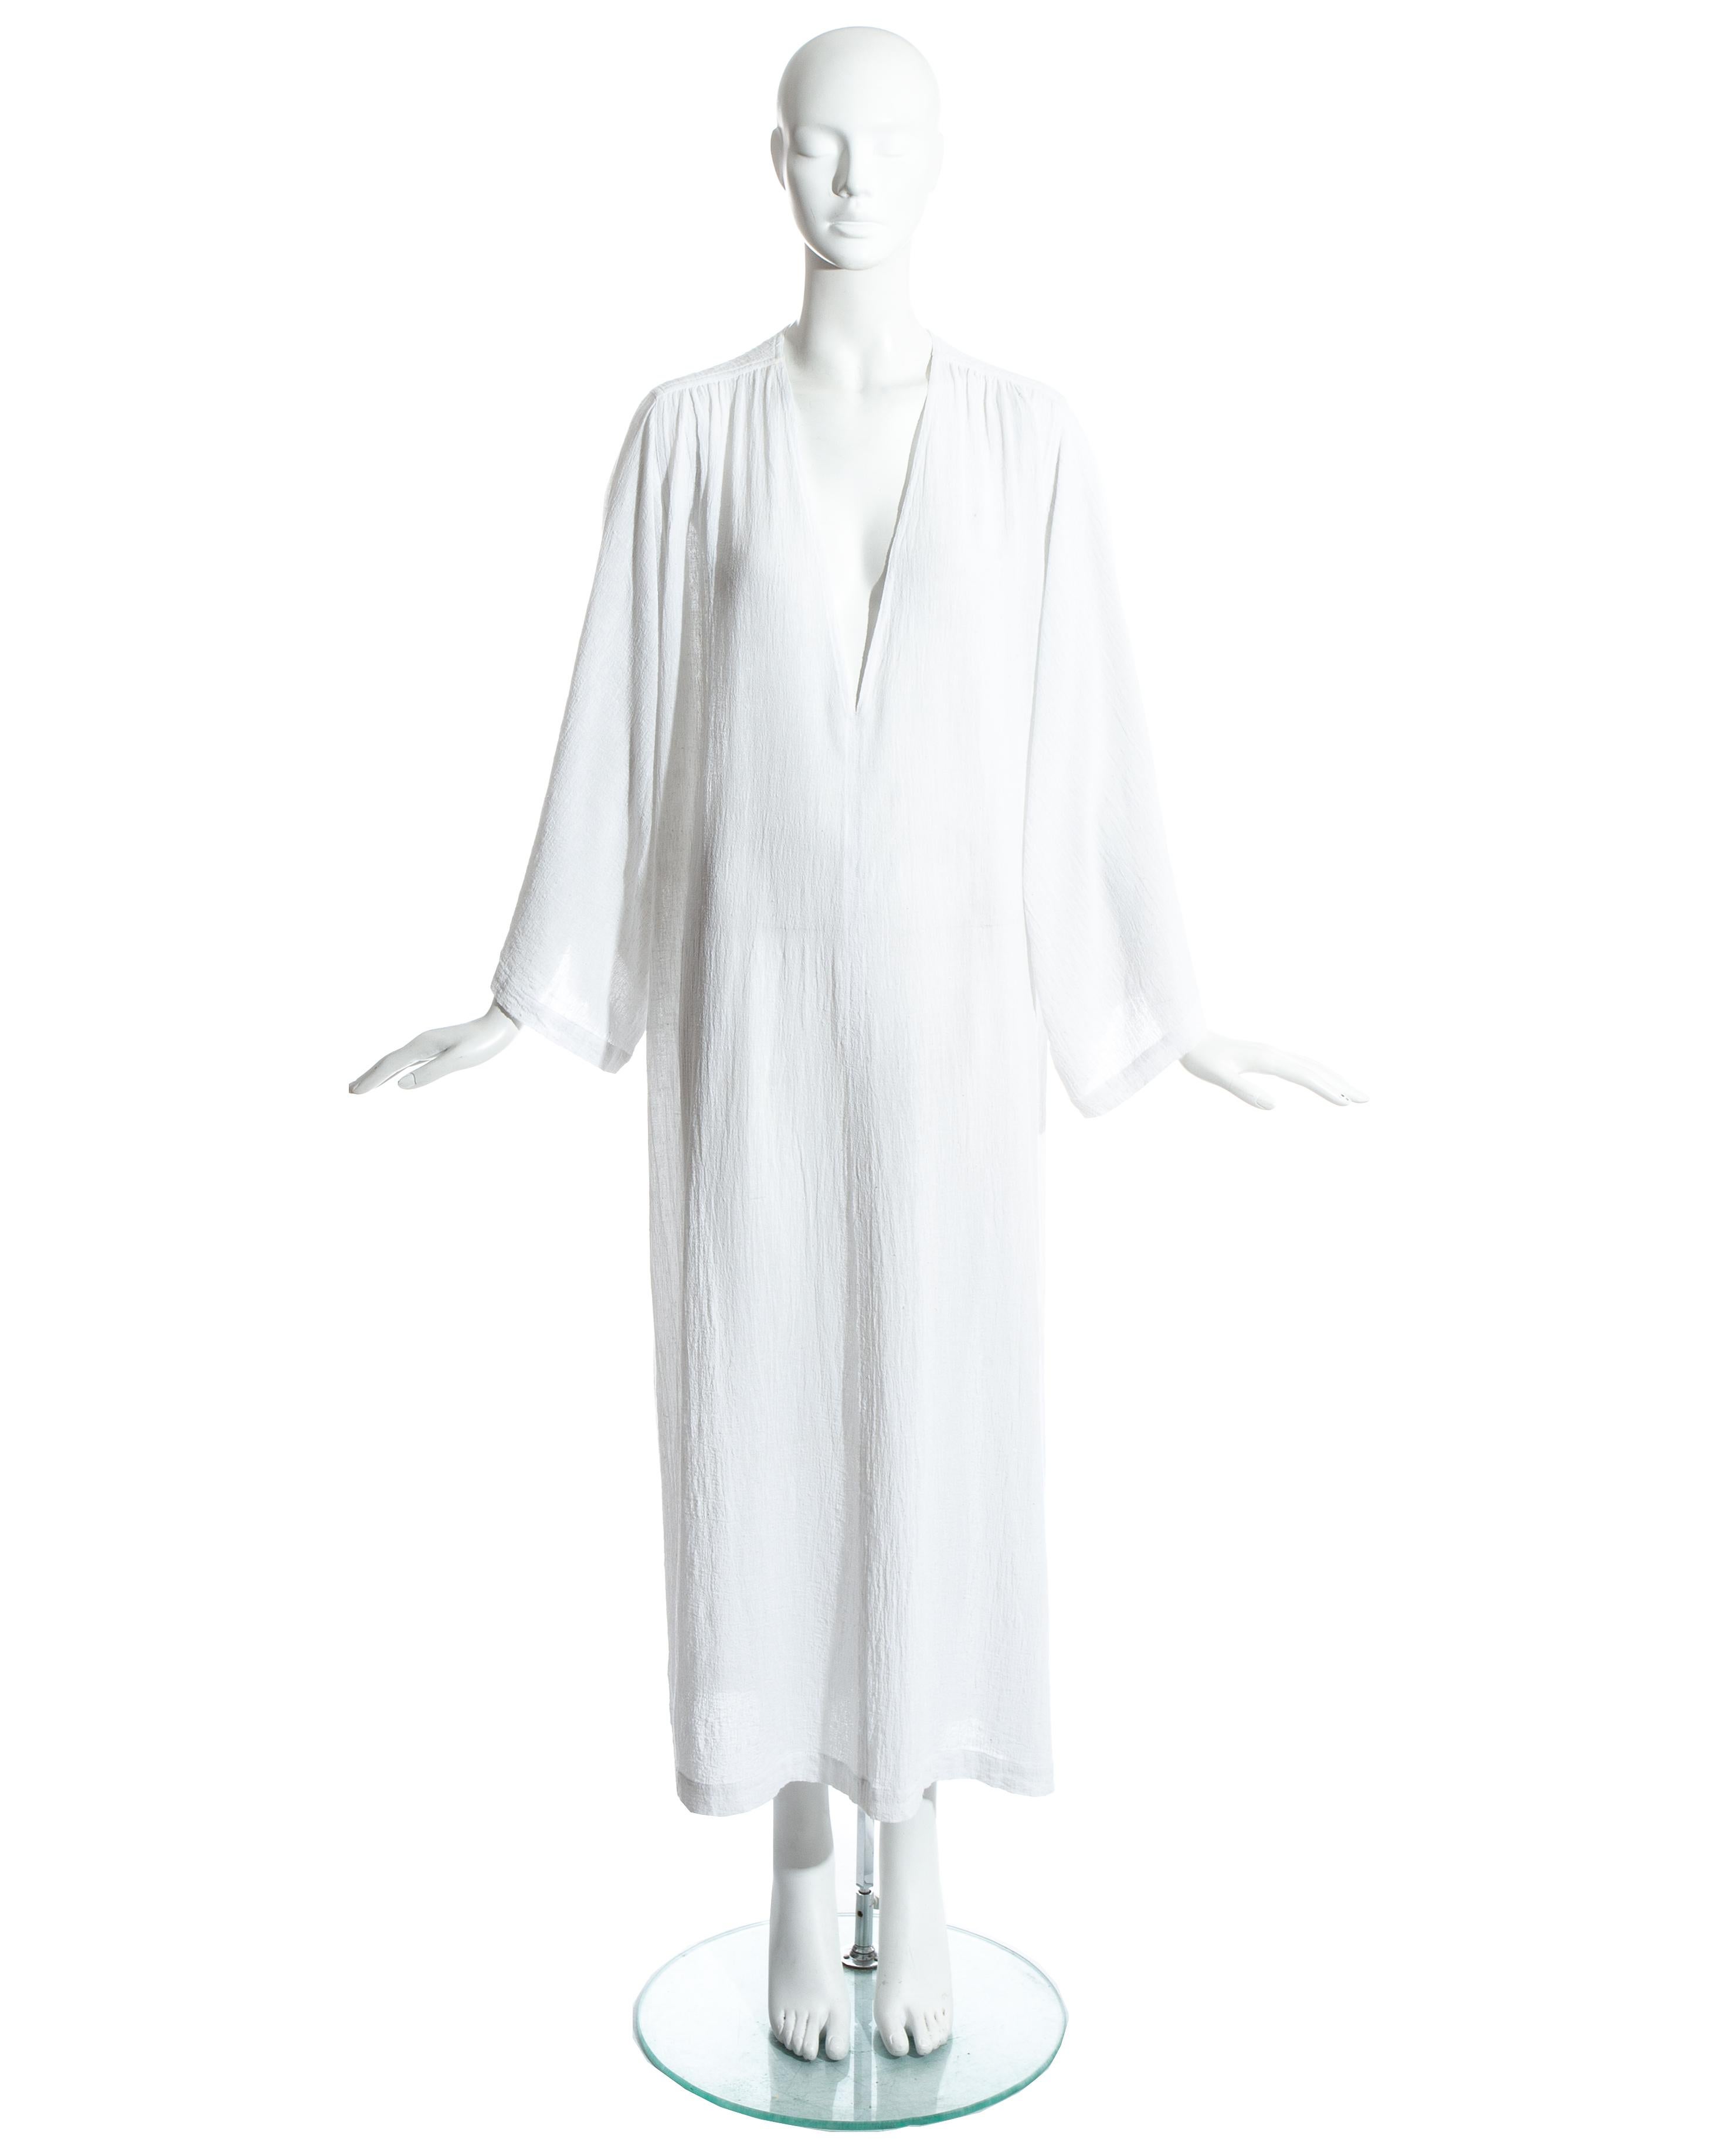 Yves Saint Laurent white cotton caftan. Wide sleeves, side slits and deep v neckline.

c. 1970s